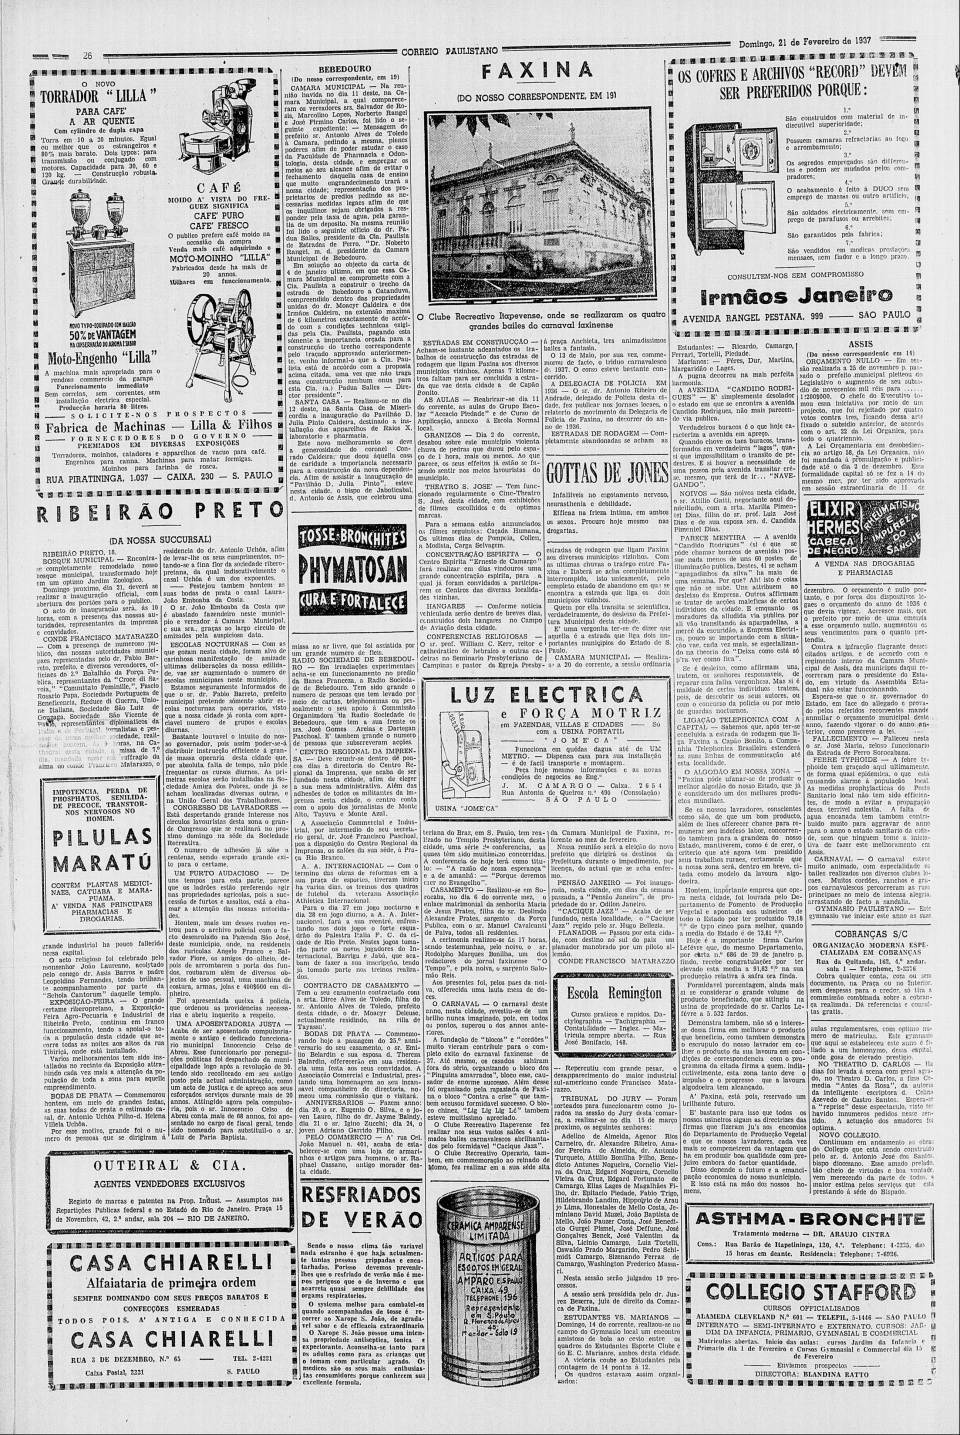 art-bebedouro-radio-sociedade-jose-gomes-areias-correio-paulistano-21-february-1937-folha